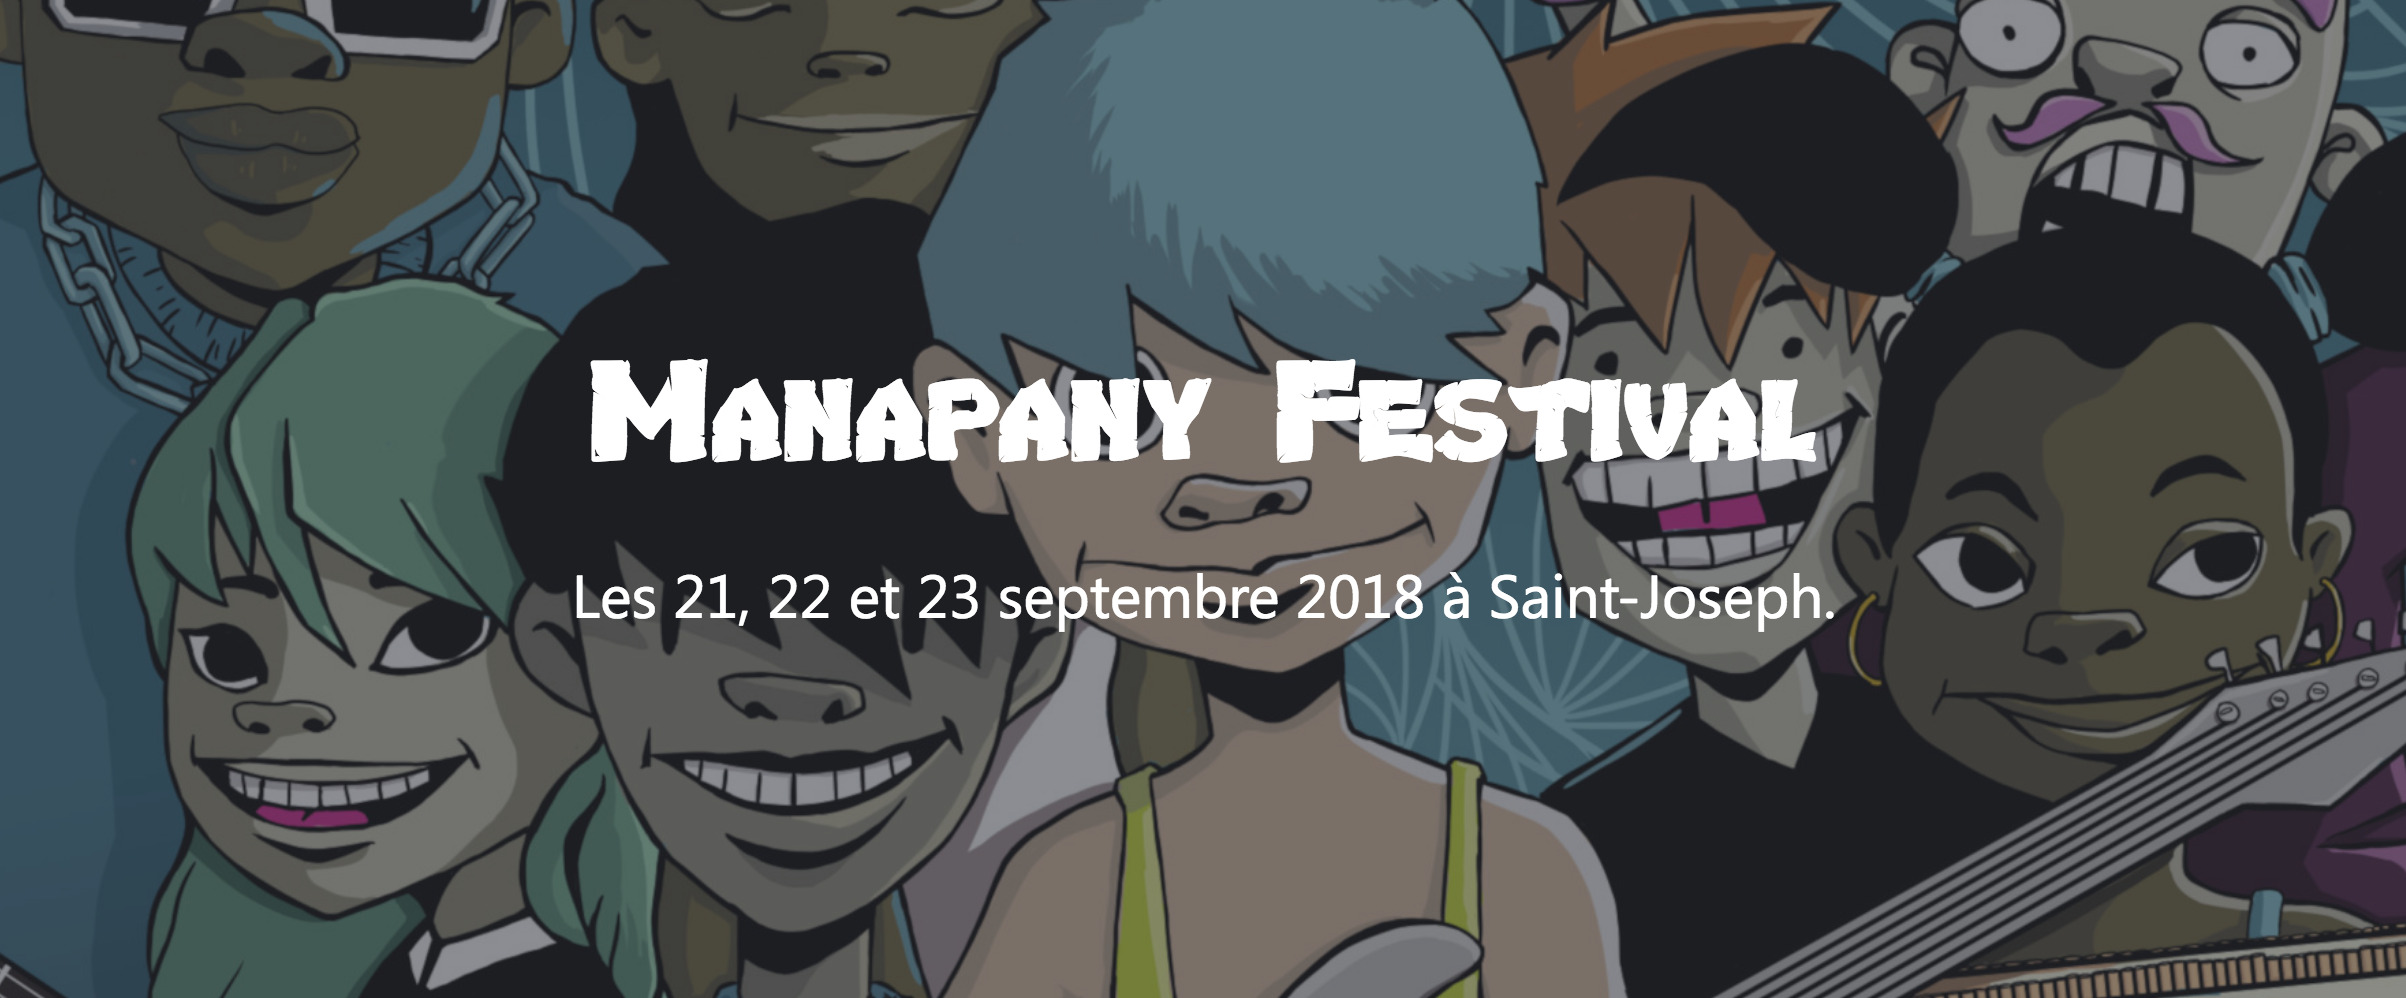 Bandeau-Manapany-Festival-2018